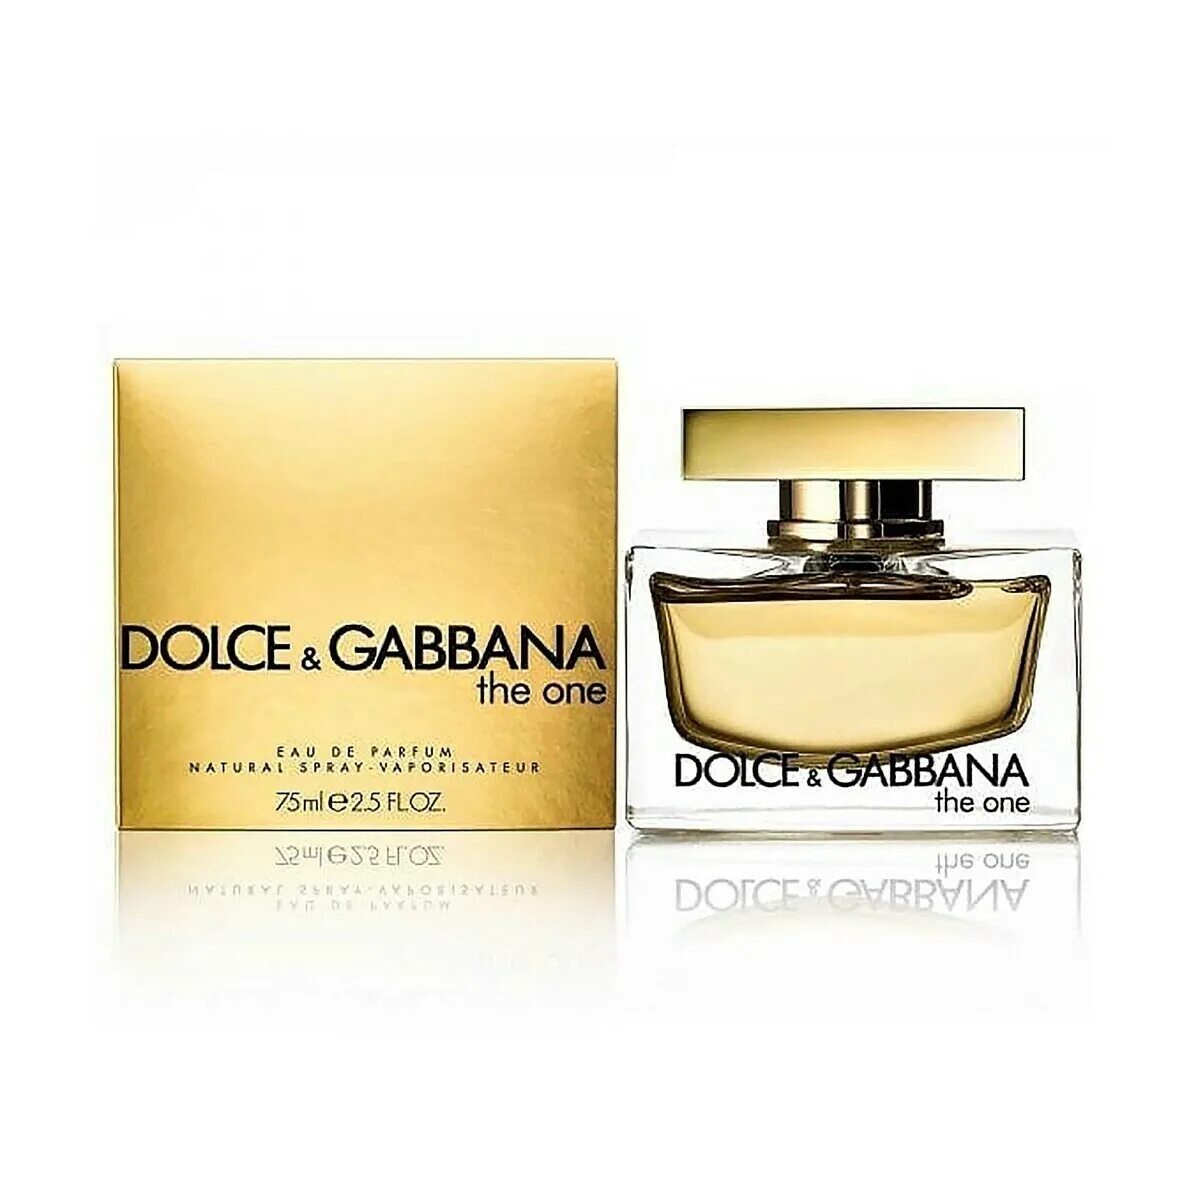 Дольче габбана the one купить. Dolce Gabbana the one 75 ml. Dolce & Gabbana the one women EDP, 75 ml. Dolce & Gabbana the one 75 мл. Dolce Gabbana the one 75ml мужские.